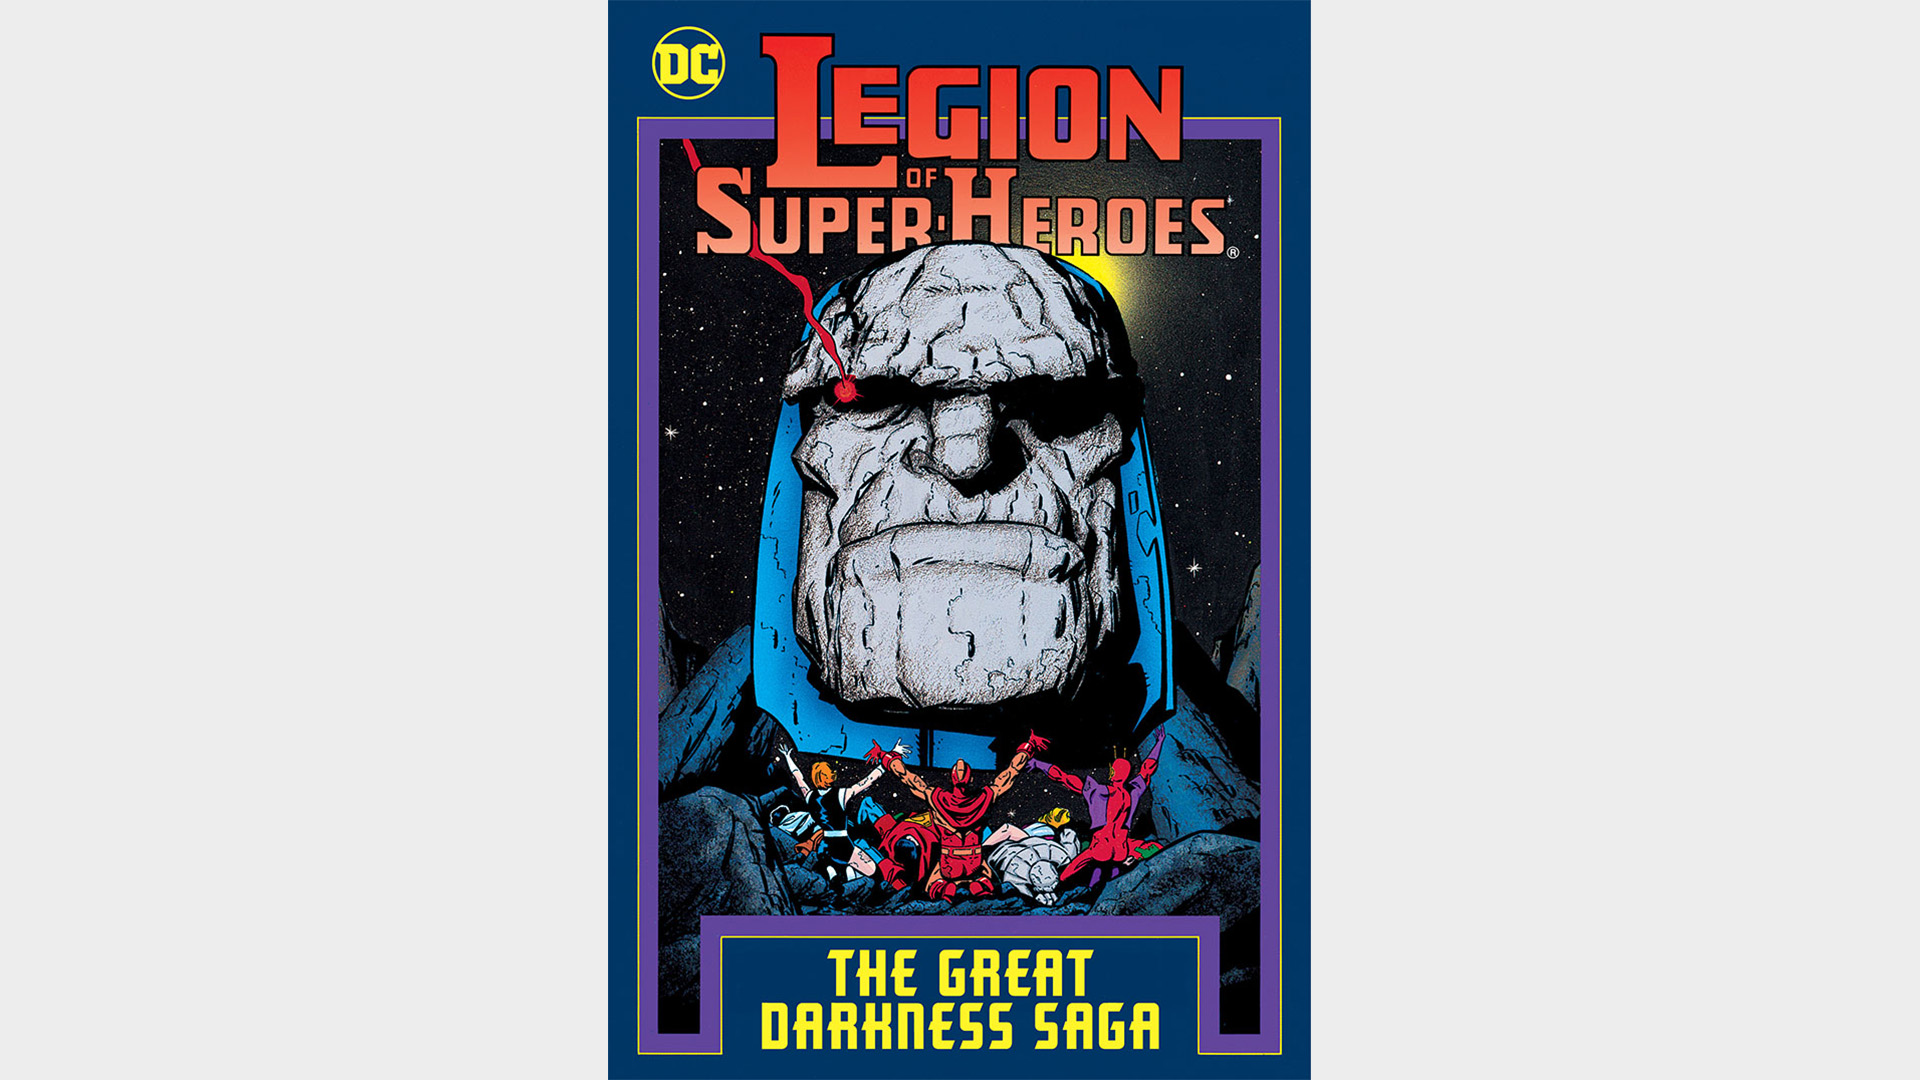 LEGION OF SUPER-HEROES: THE GREAT DARKNESS SAGA